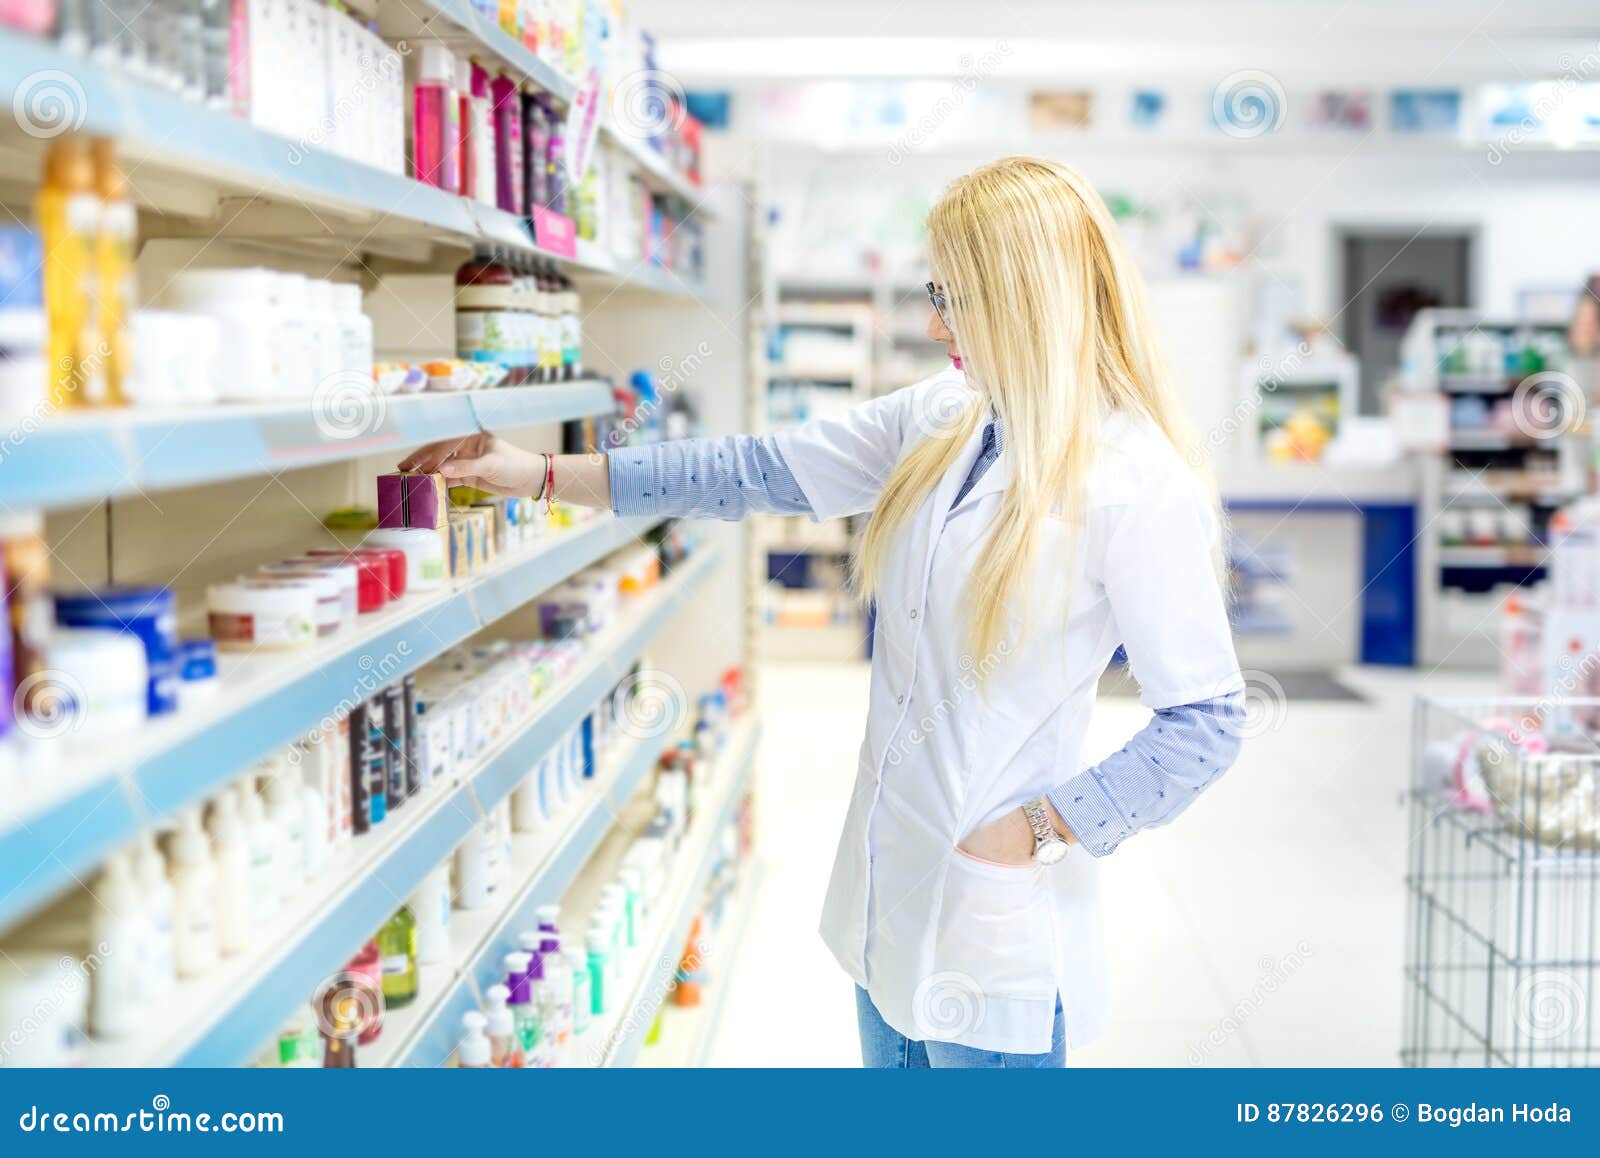 blonde pharmacist selling antibiotics and prescription drugs. pharmaceutical medical details